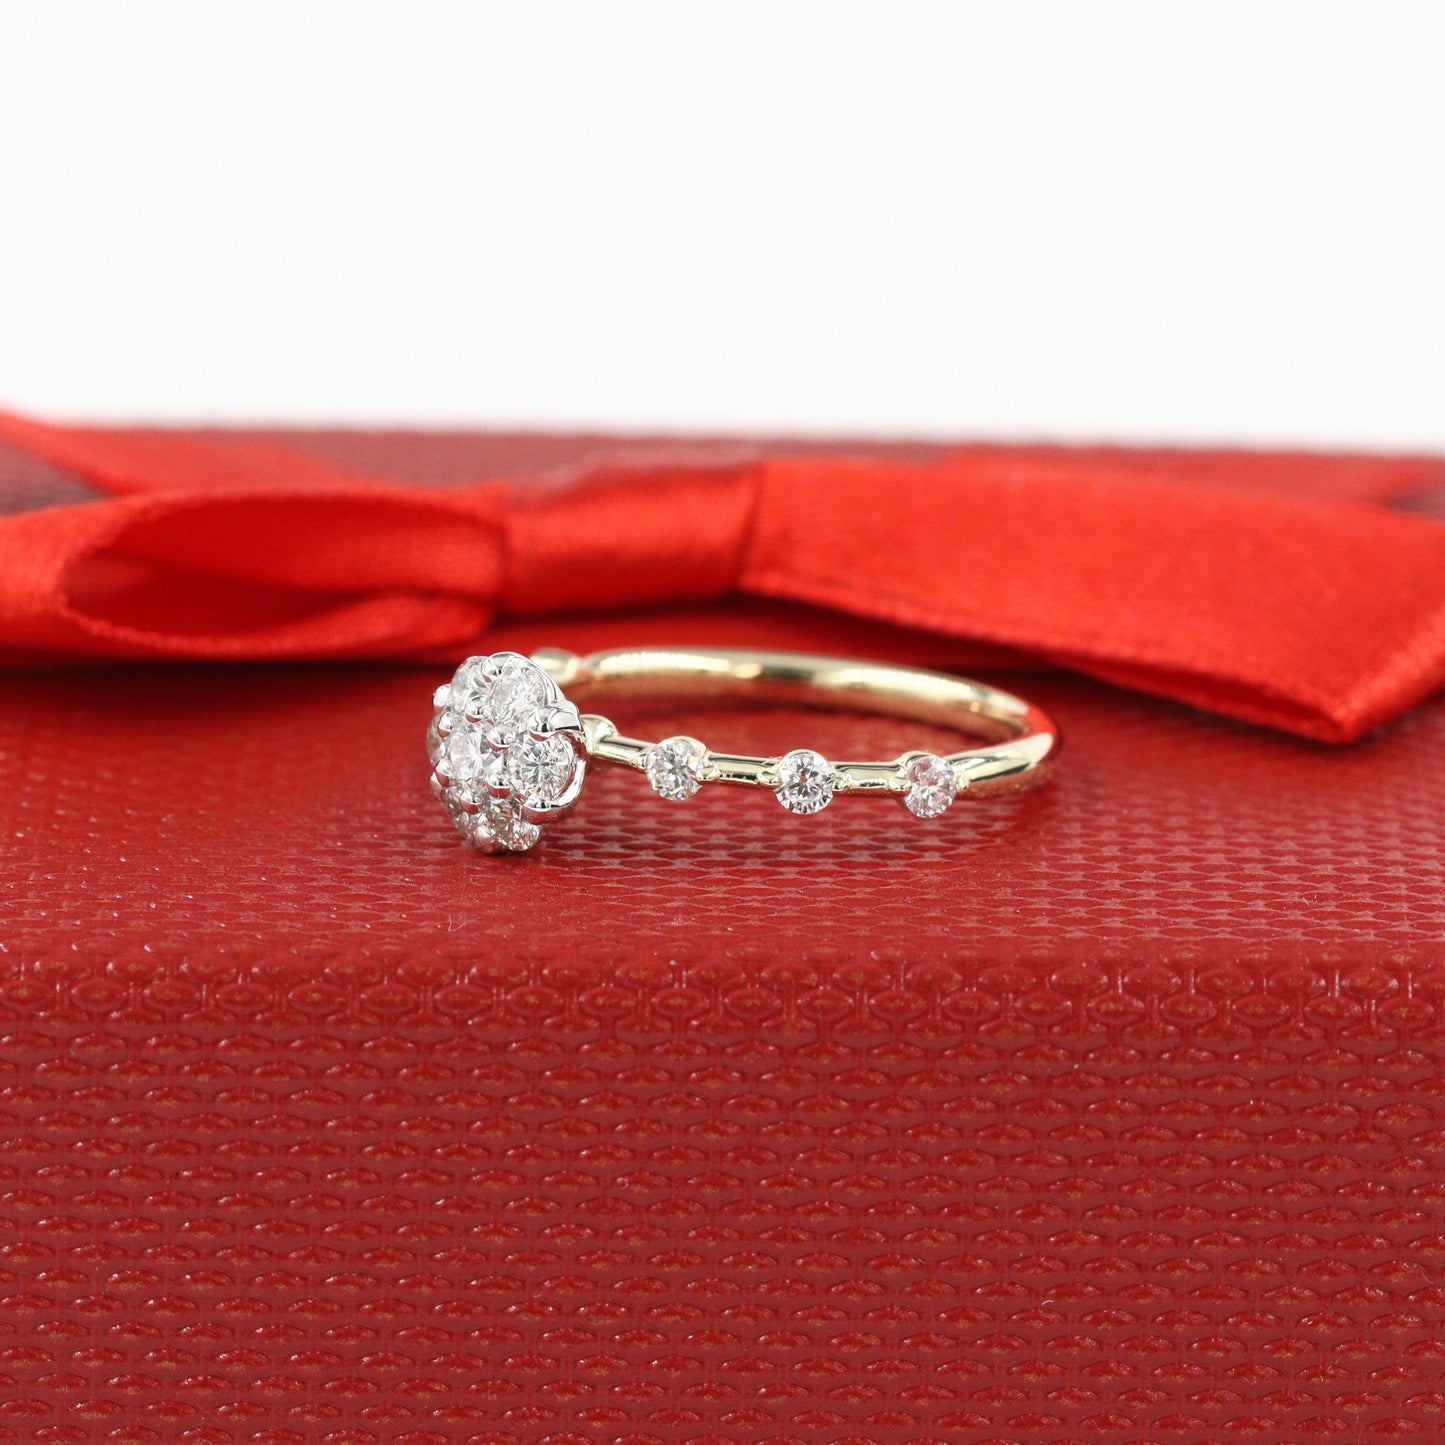 Unique Diamond Engagement Ring/ 7mm Diamond Flower Ring/ Natural Diamond Anniversary Ring/ Anniversary Ring/ Girt for her